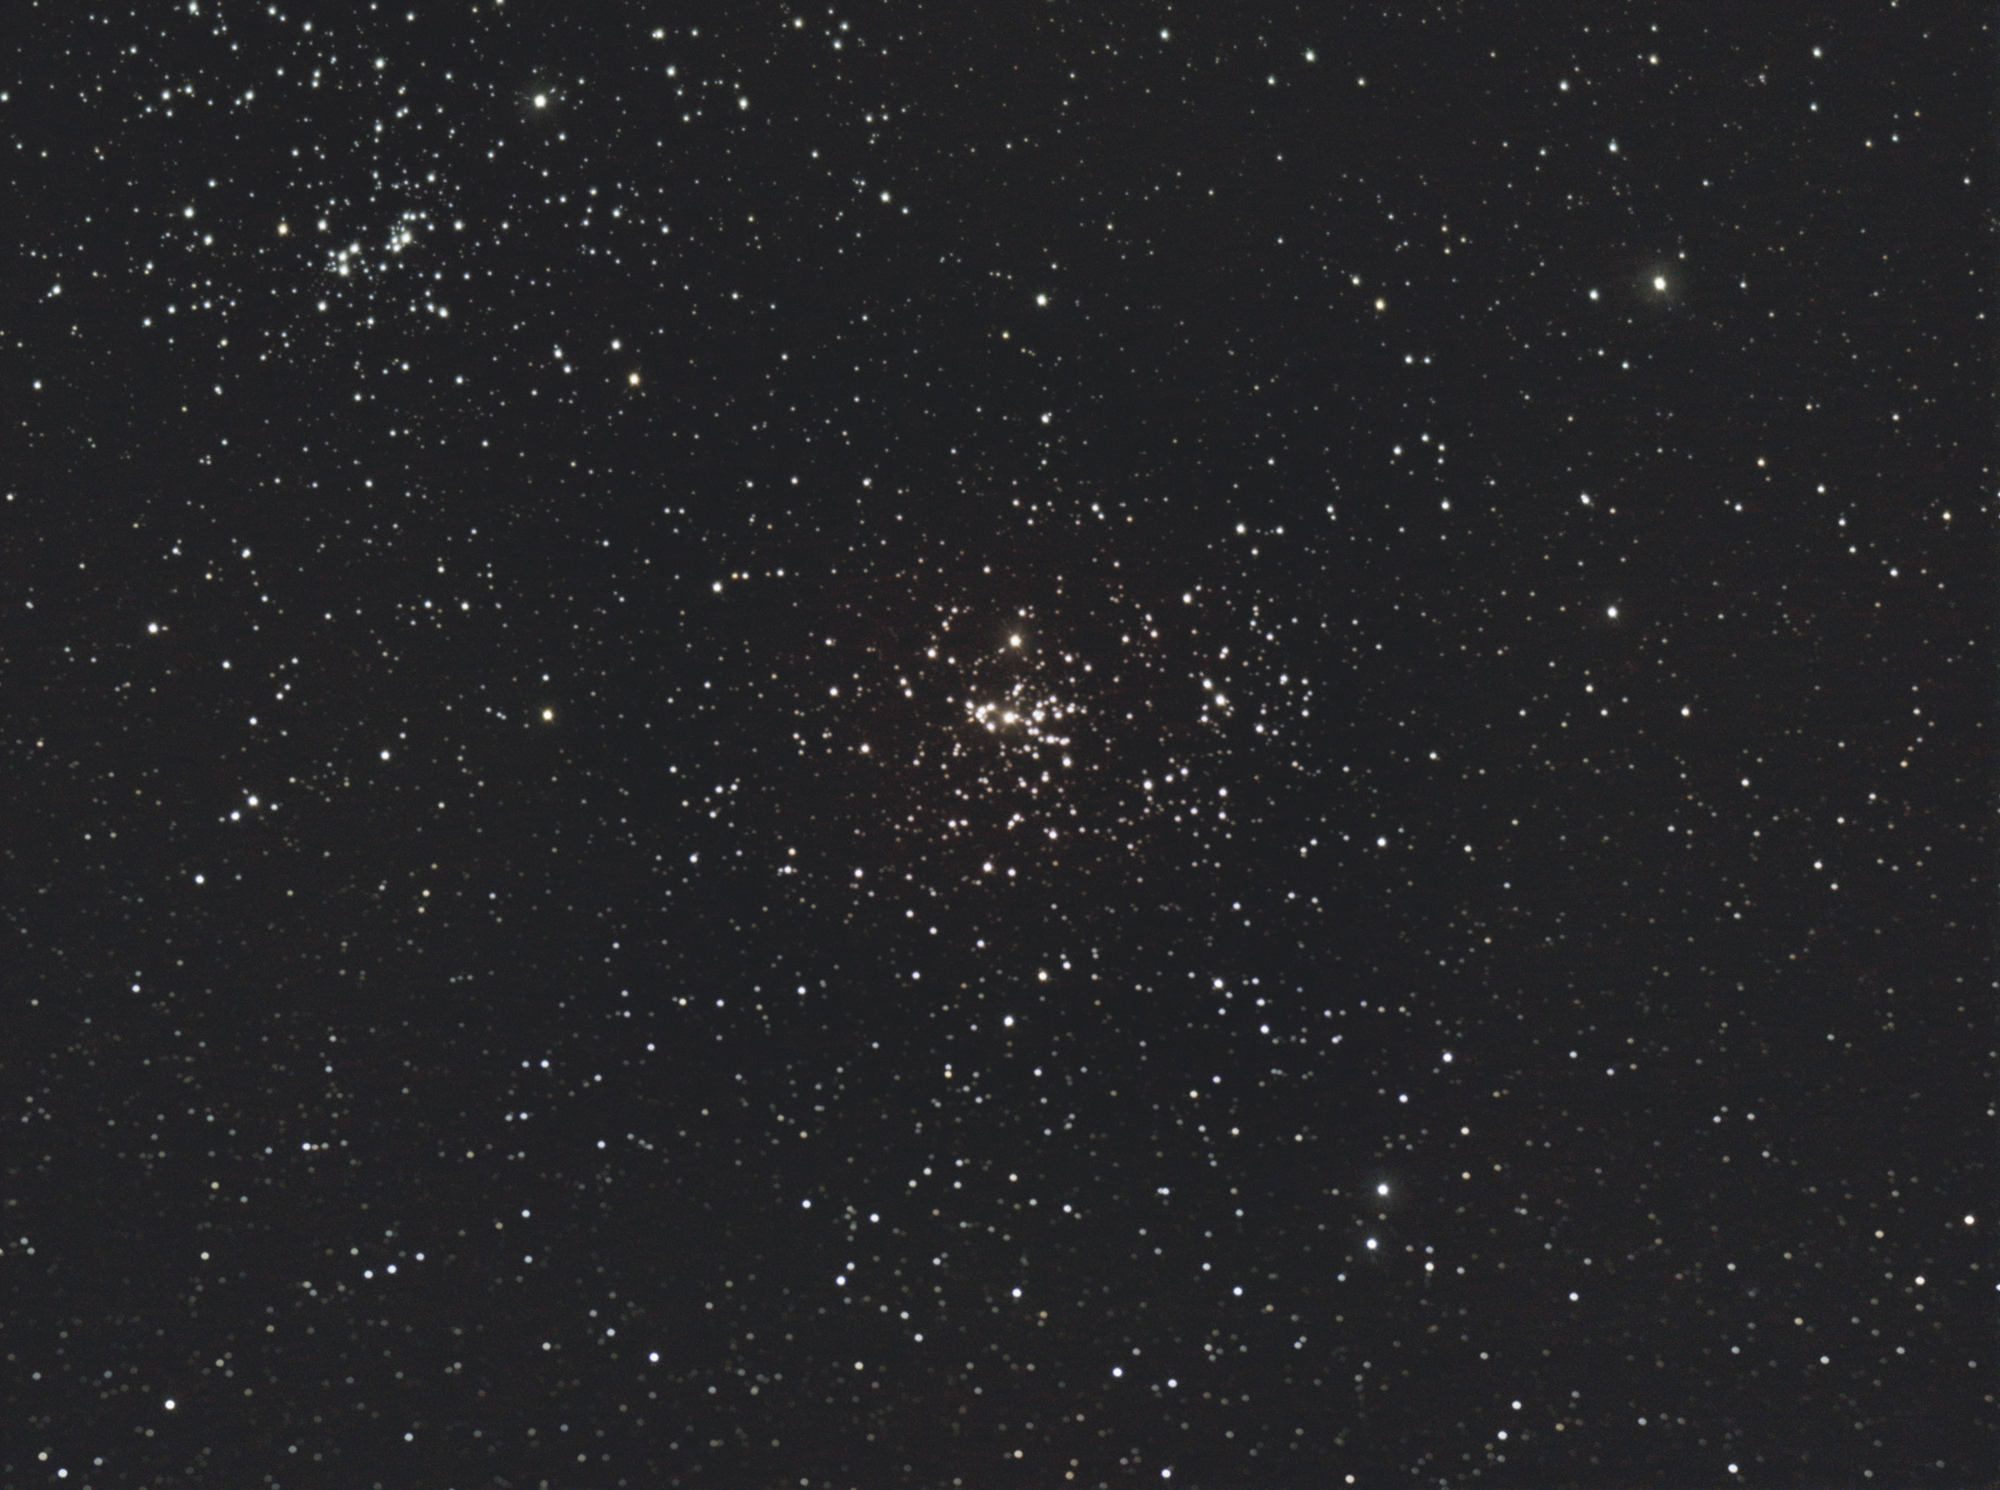 65f83a0610942_NGC884doubleamsdepersresult_1230s.jpg.248eb7d19daa421791da1064399ef502.jpg